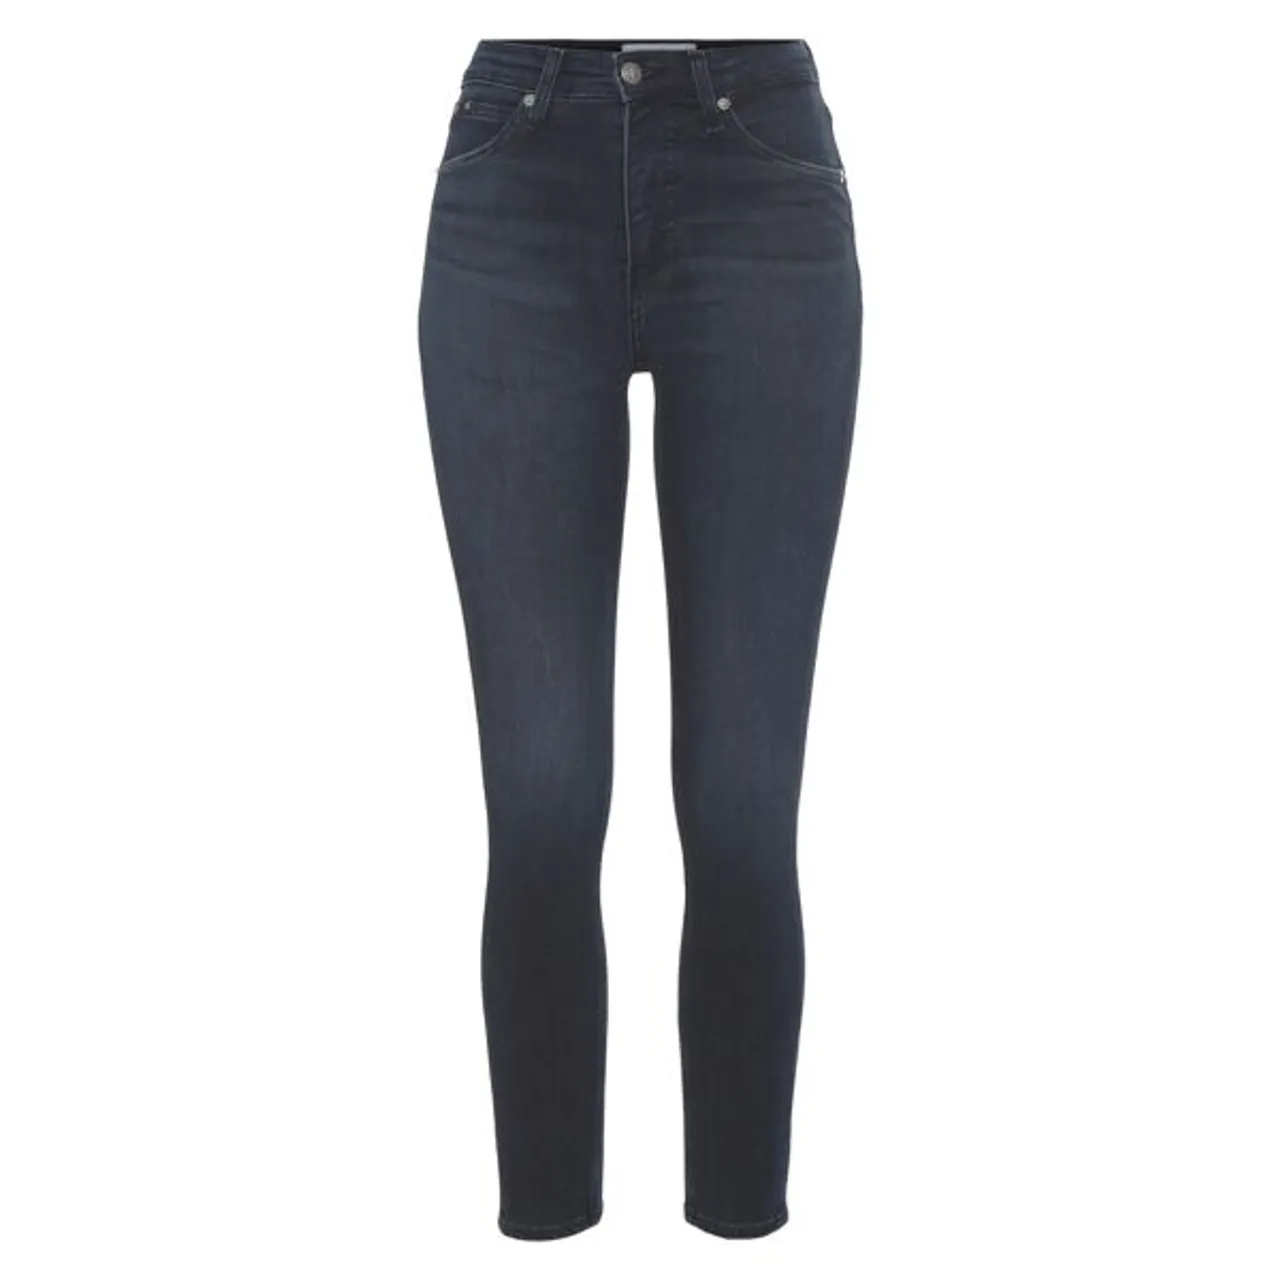 Skinny-fit-Jeans CALVIN KLEIN JEANS "HIGH RISE SUPER SKINNY ANKLE" Gr. 26, N-Gr, blau (denim dark) Damen Jeans Röhrenjeans